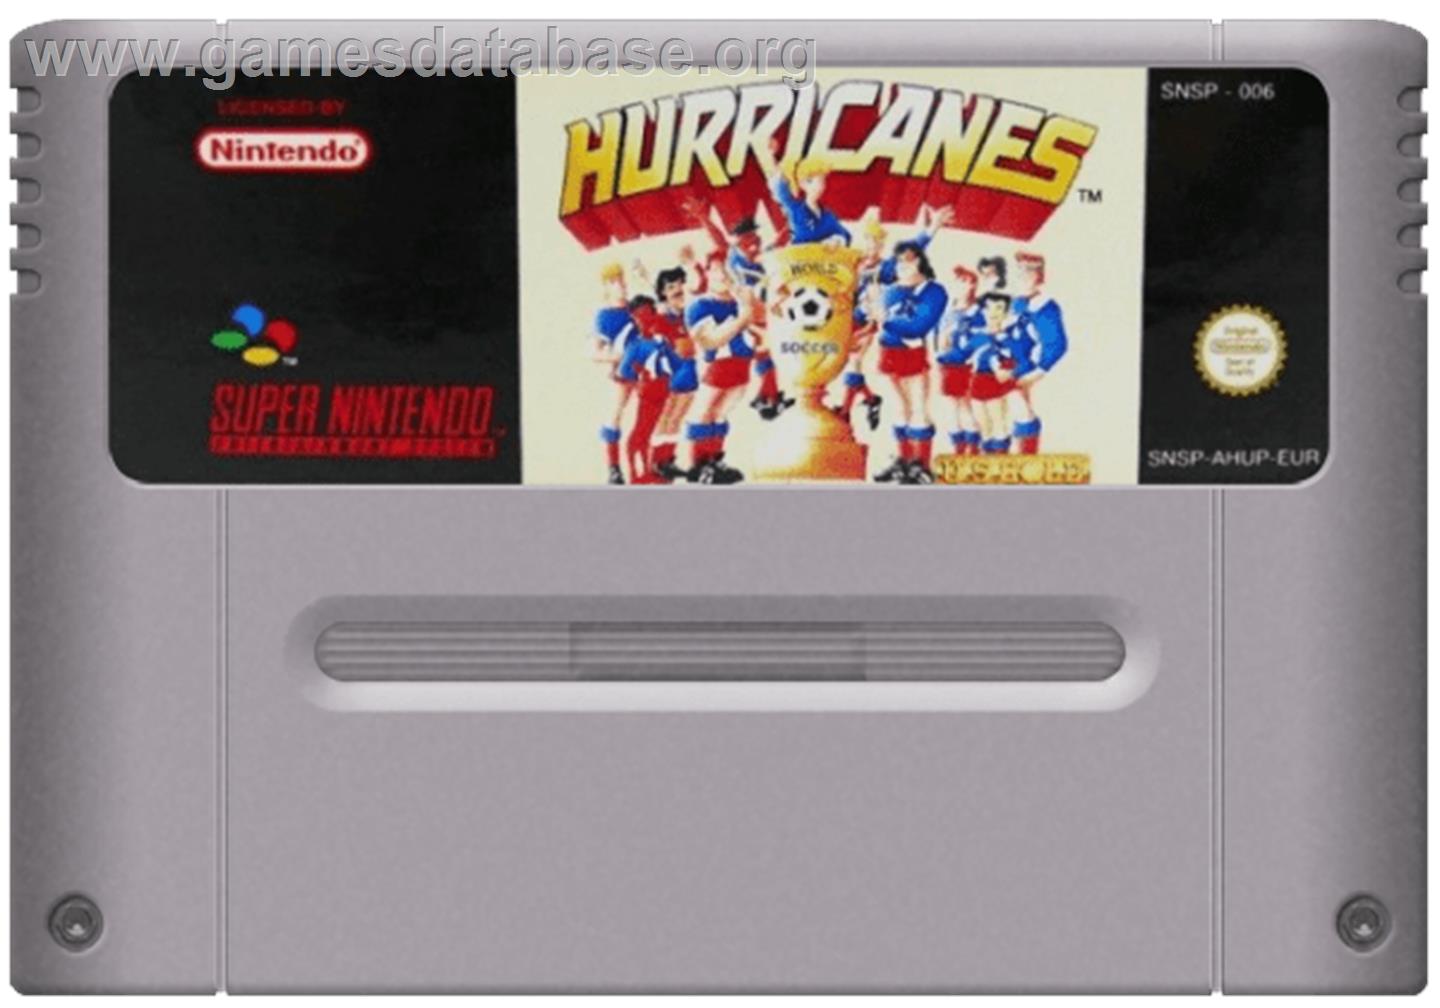 The Hurricanes - Nintendo SNES - Artwork - Cartridge